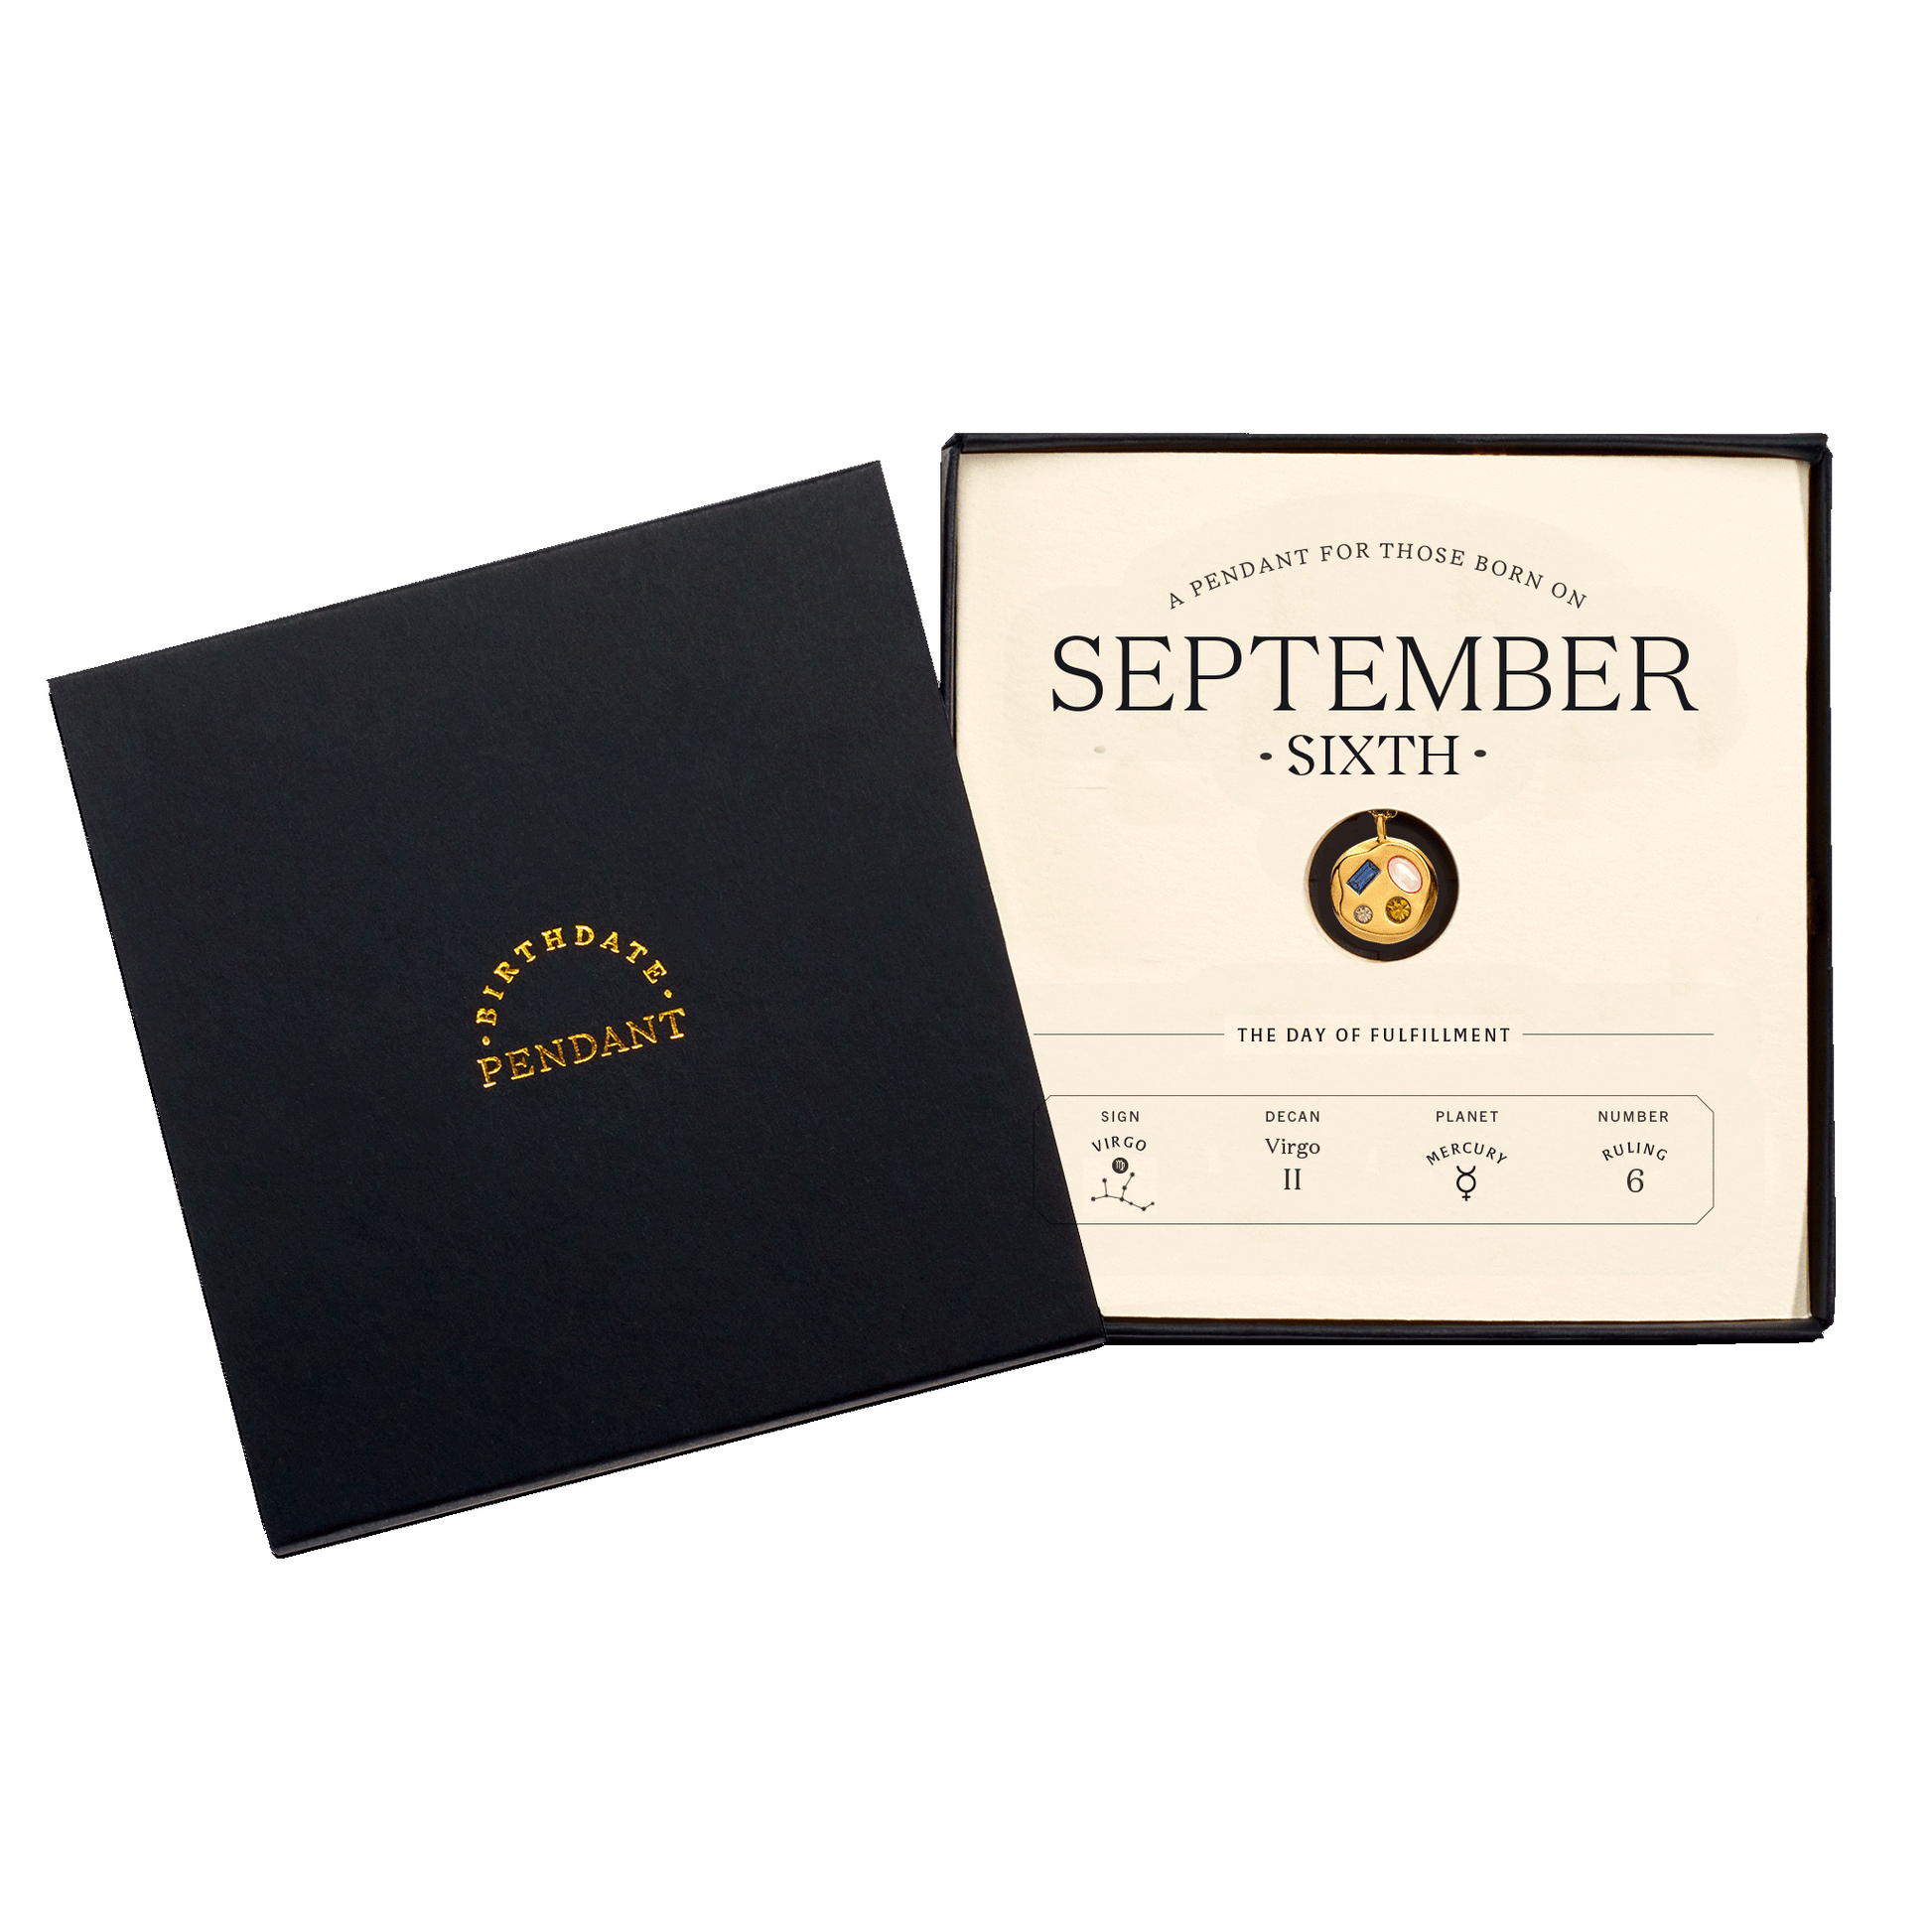 The September Sixth Pendant inside its box